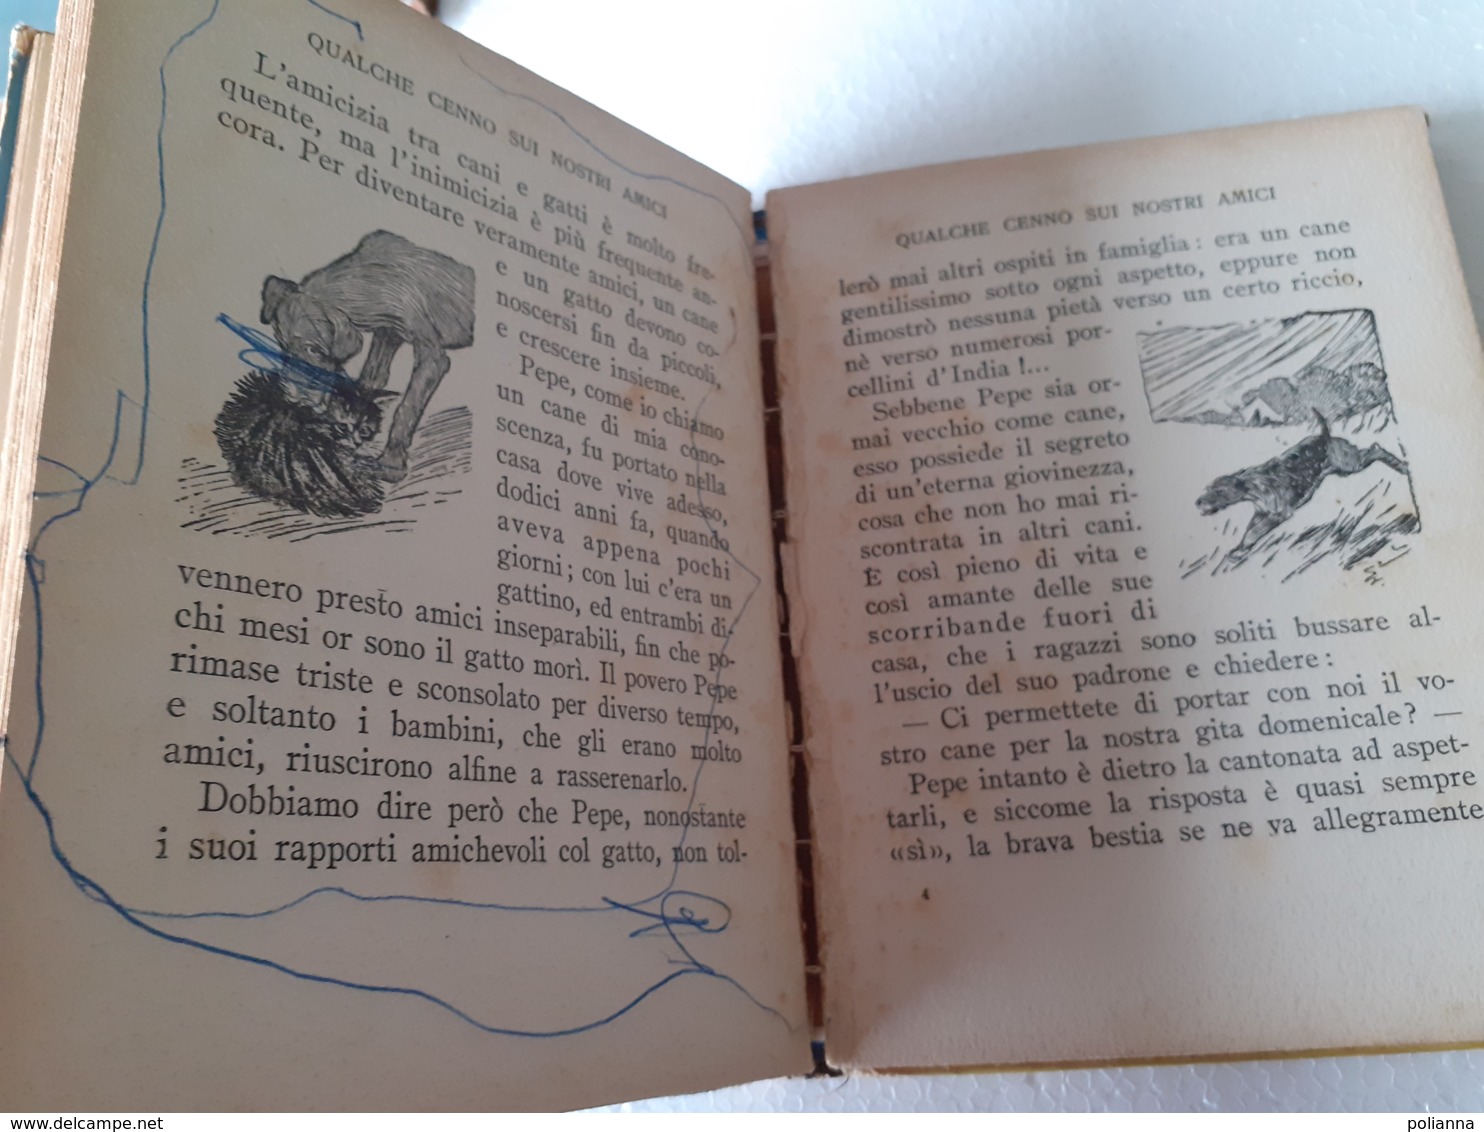 M#0W56 "Piccoli Libri Giganti" : I NOSTRI AMICI Salani Ed.1941/CANI/DOGS - Oud